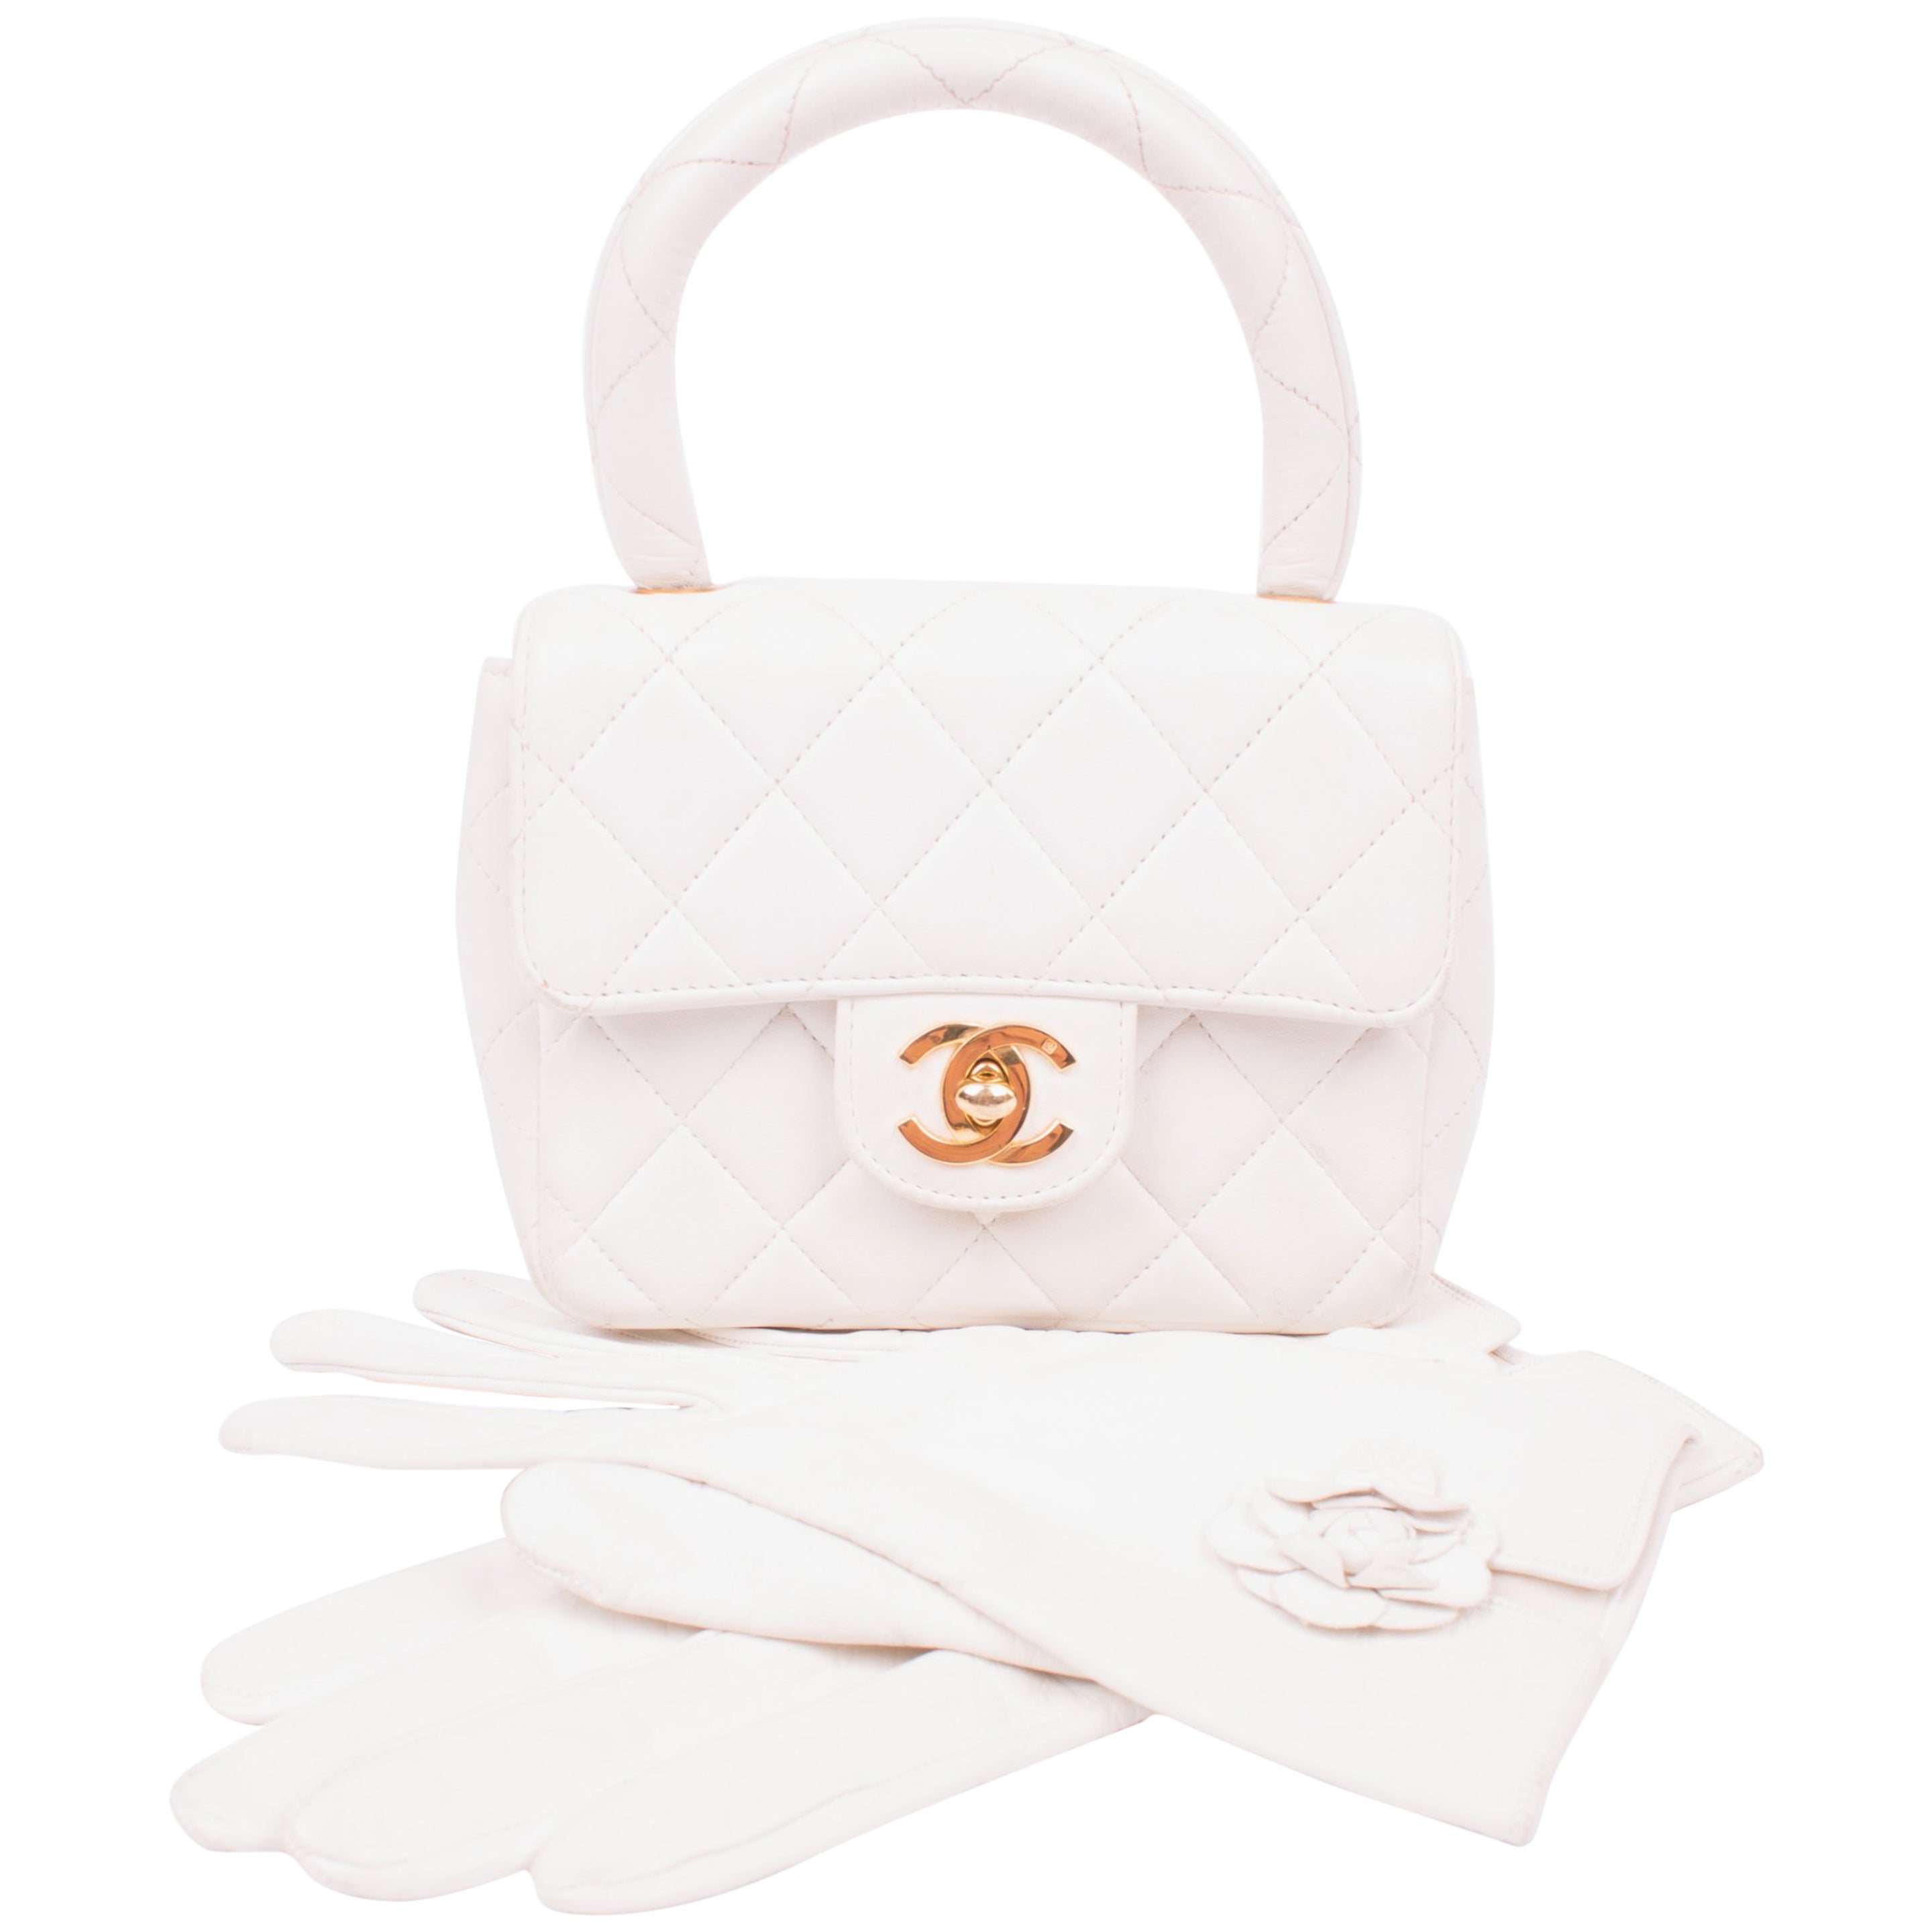 Vintage Chanel Kelly Parent and Child Flap Bag Set Pink Lambskin